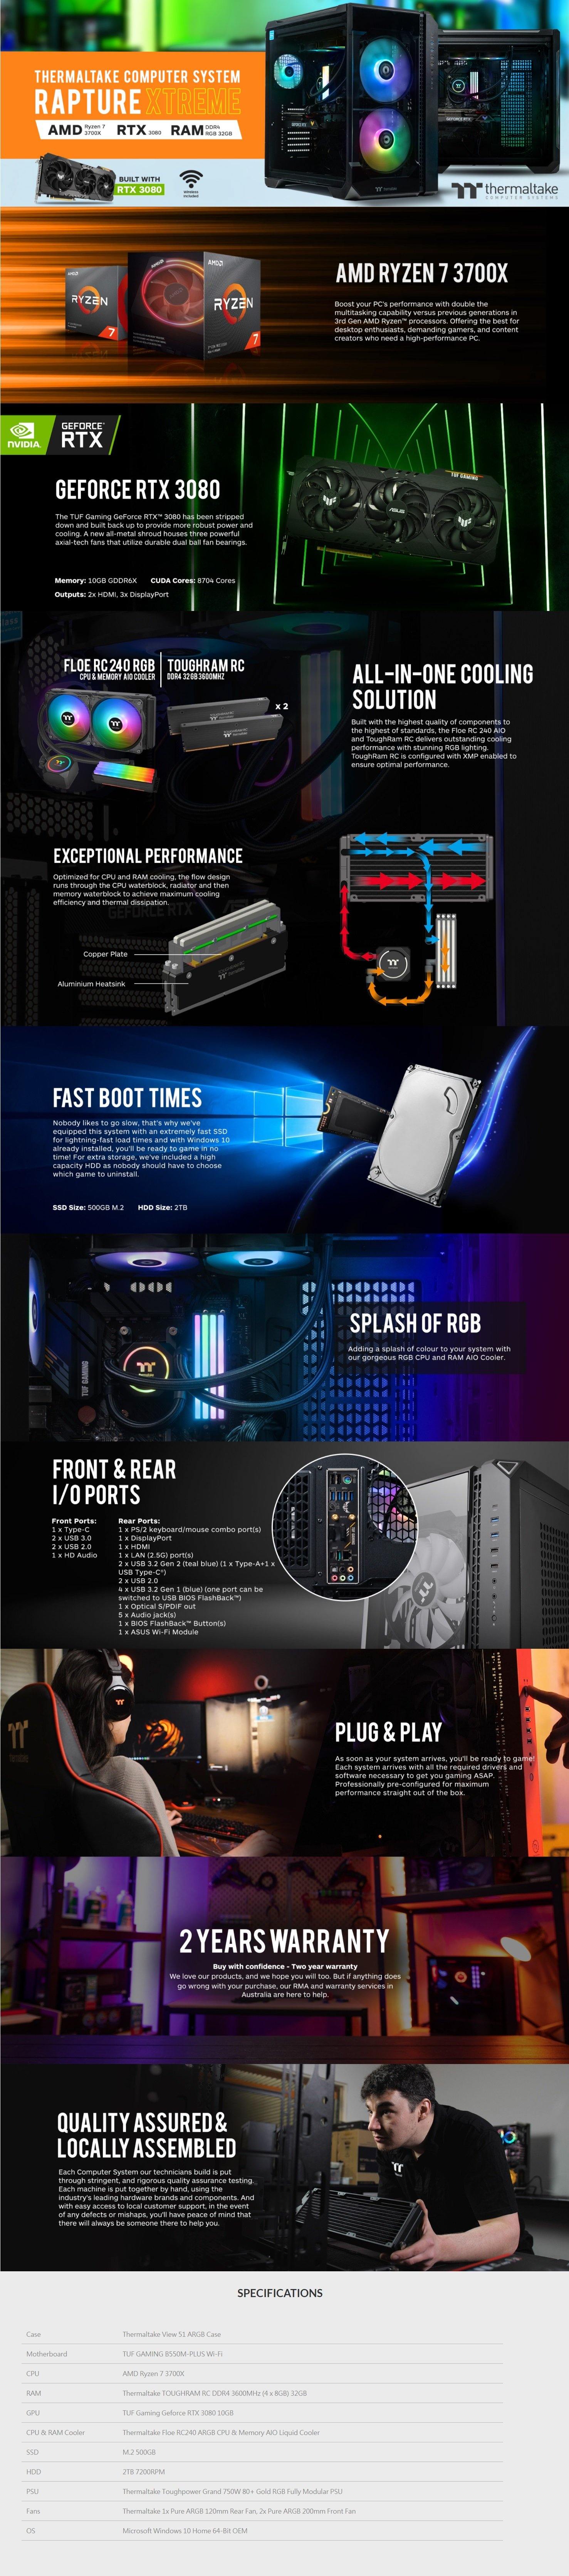 Raptor Extreme Intel - Custom Pc's Australia